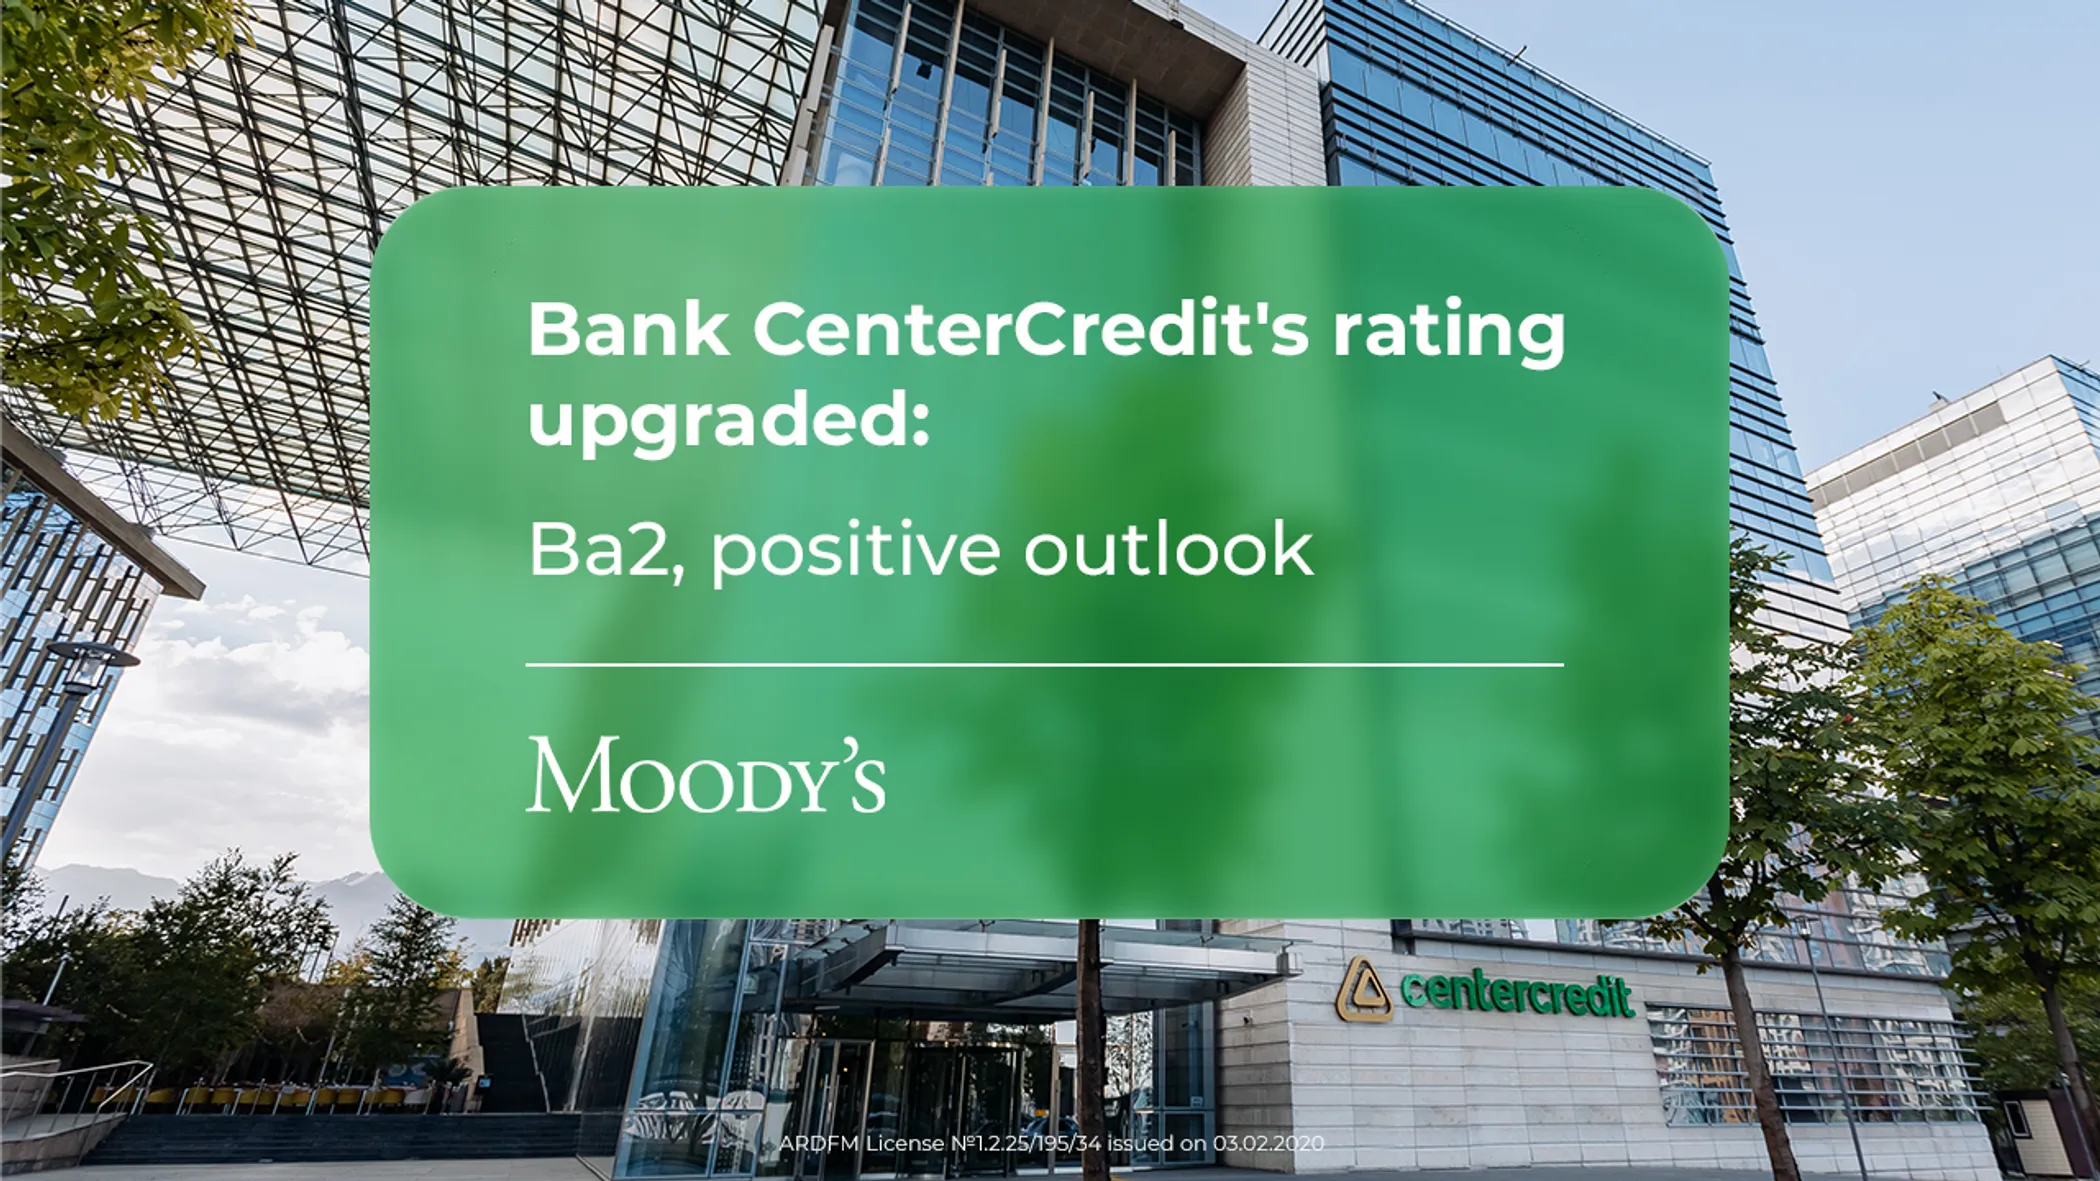 Moody's Upgrades Bank CenterCredit's Rating to Ba2